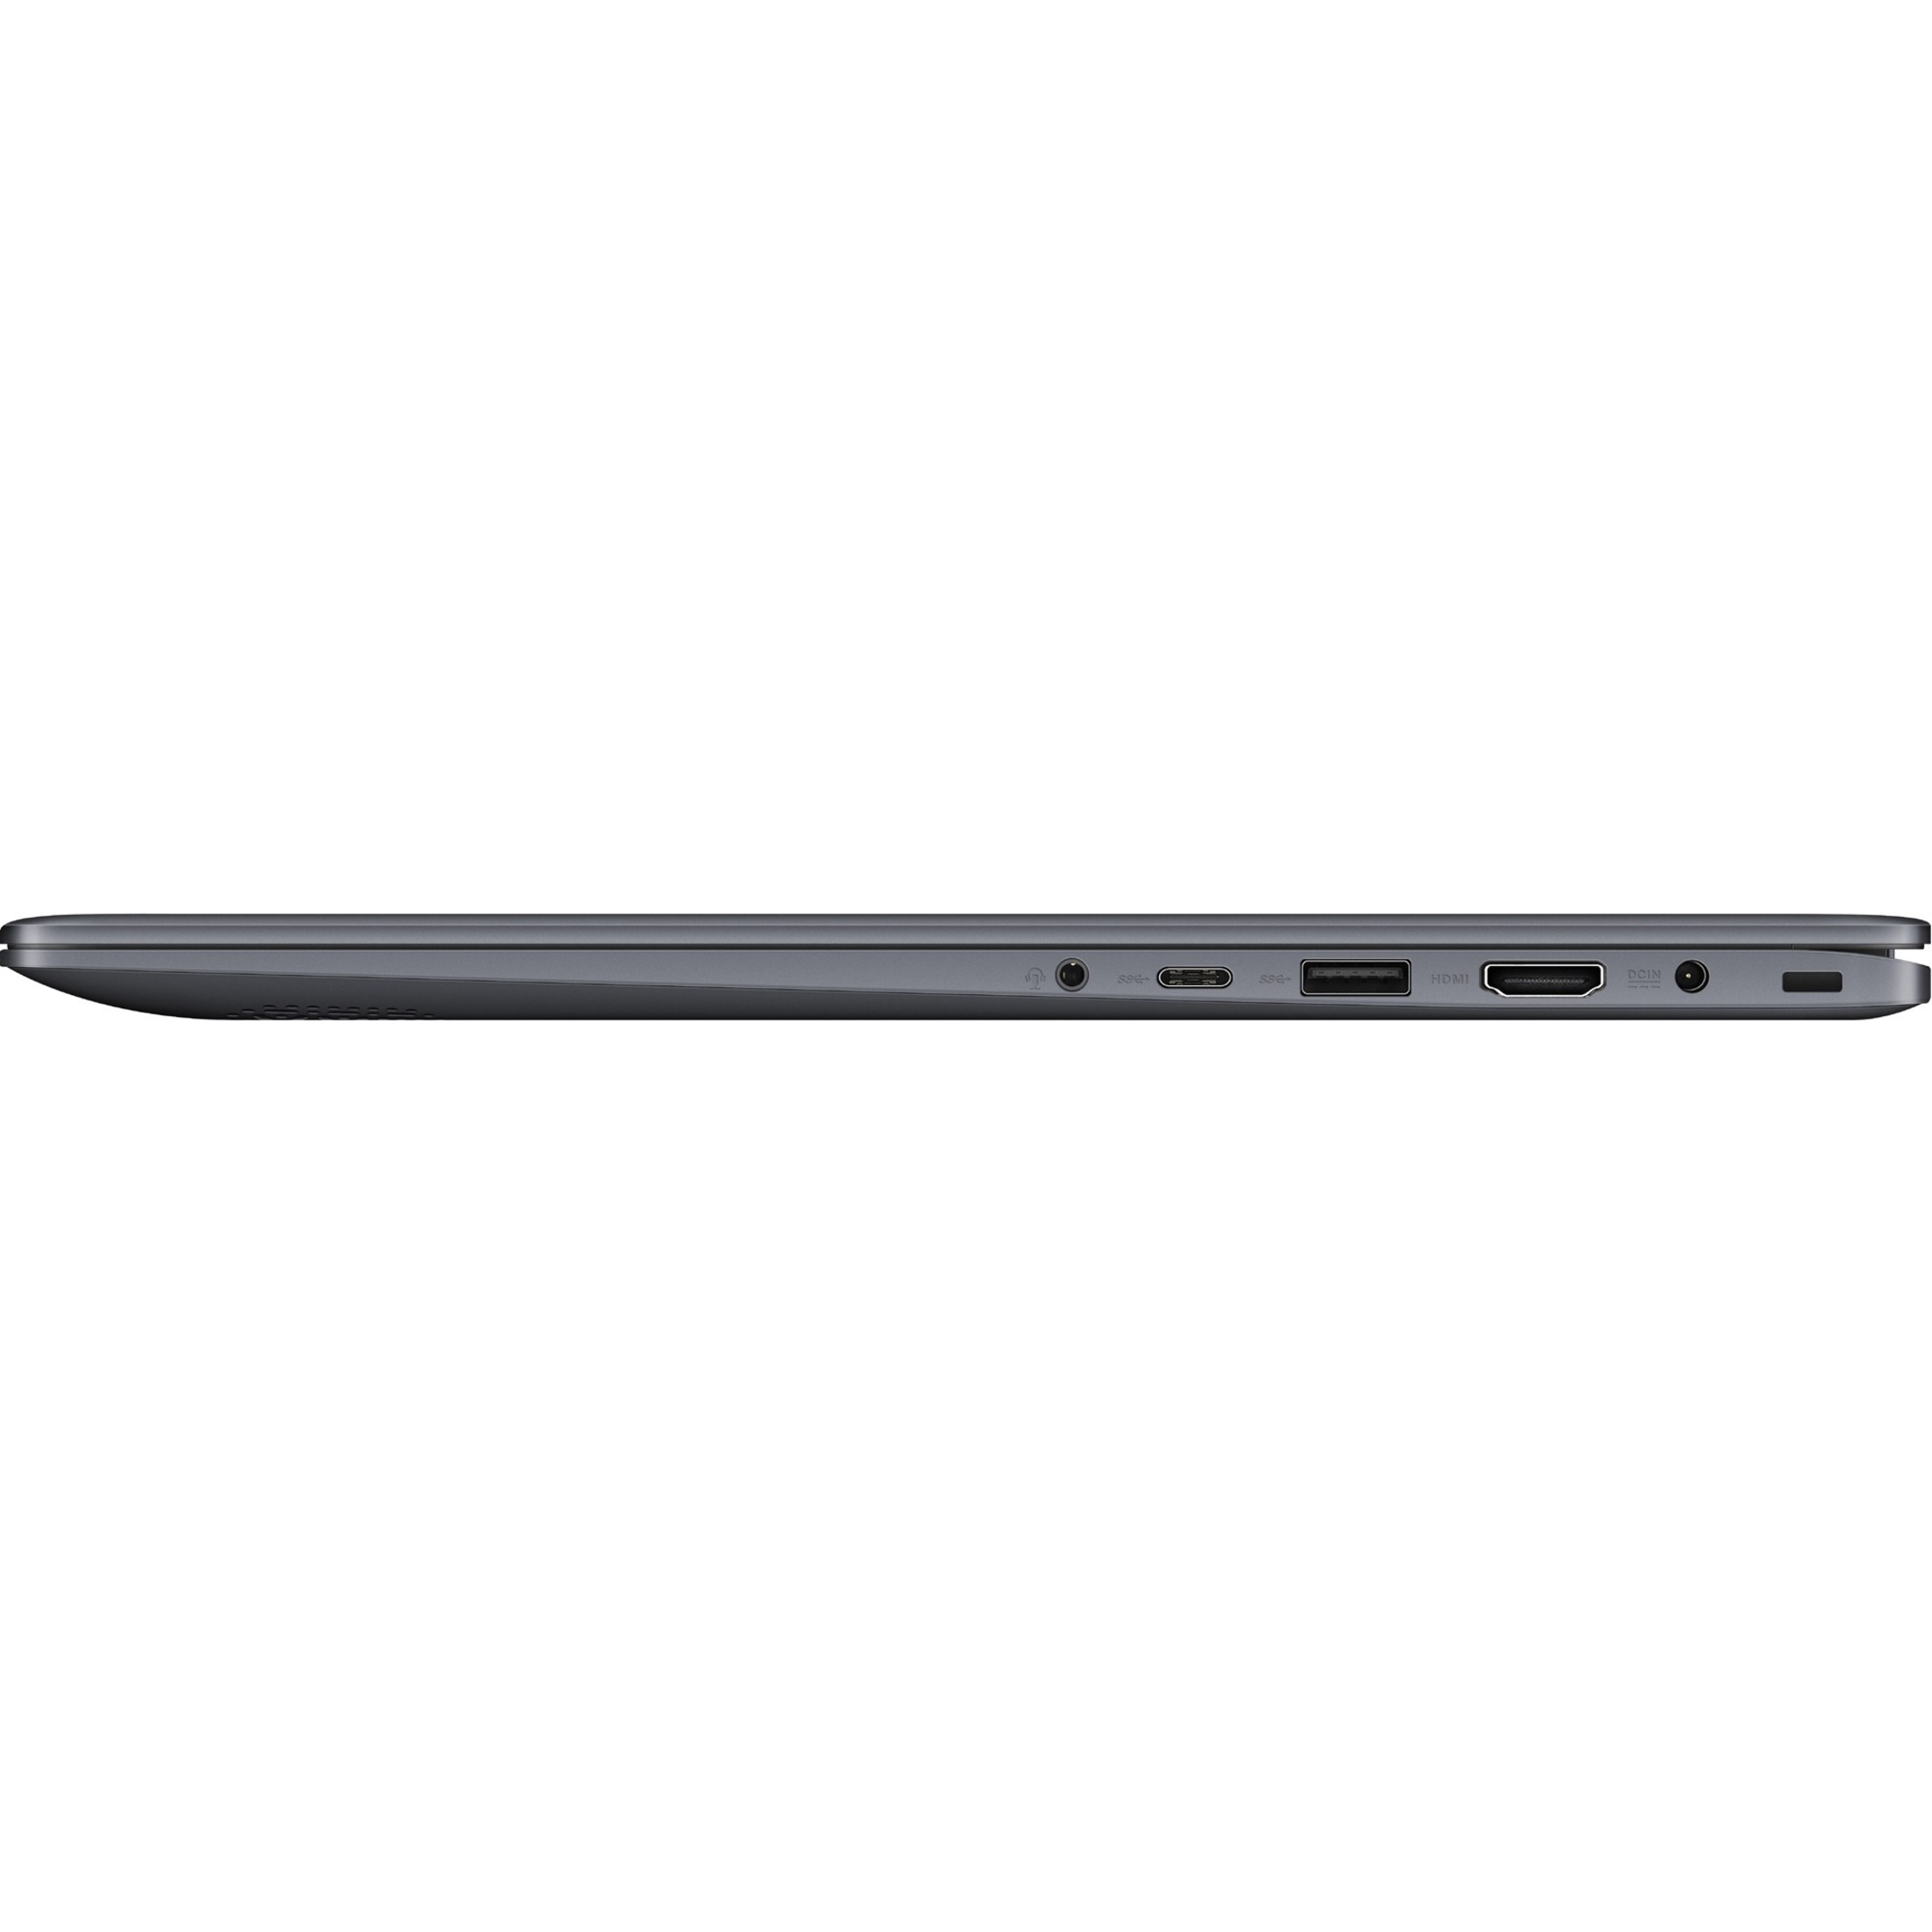 Asus VivoBook Flip 14 14" Full HD Touchscreen Laptop, Intel Core i5 i5-8250U, 256GB SSD, Windows 10, TP412UA-DB51T - image 2 of 39